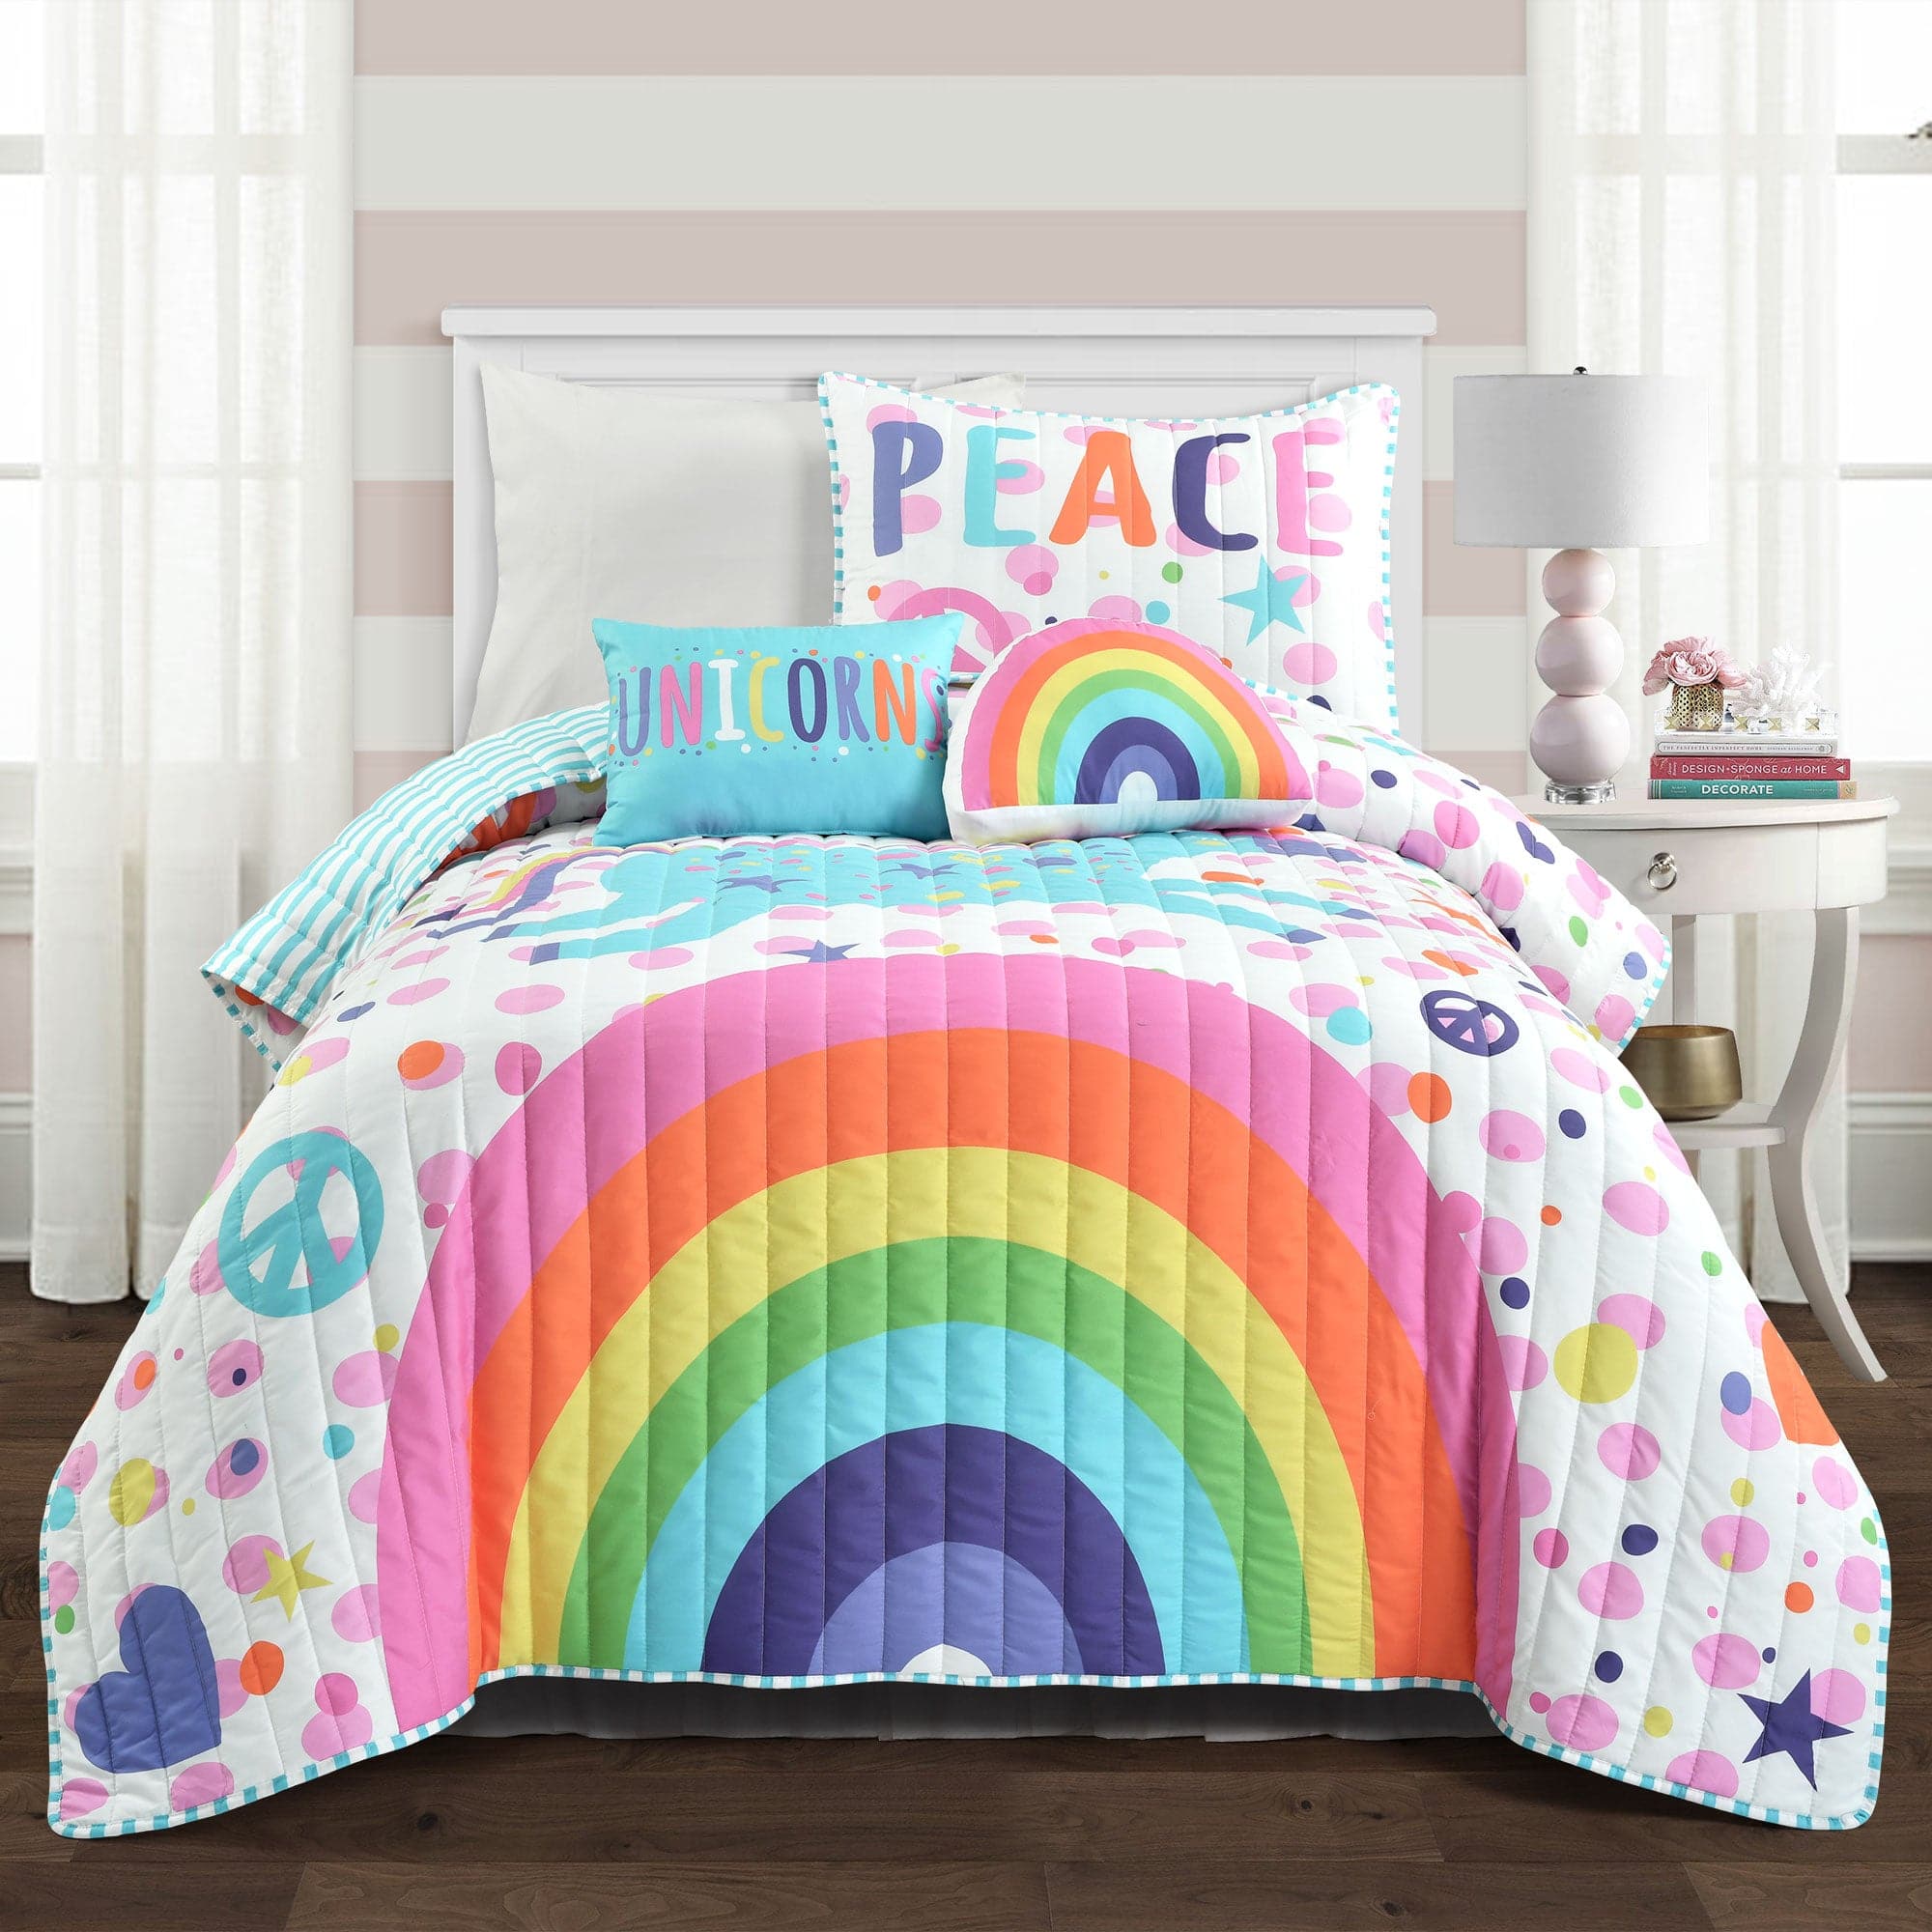 Over the rainbow 🌈 • • • #woodendecor #bedroomdecor #childrensbedroomdecor  #pastelbedroom #unicorn #…